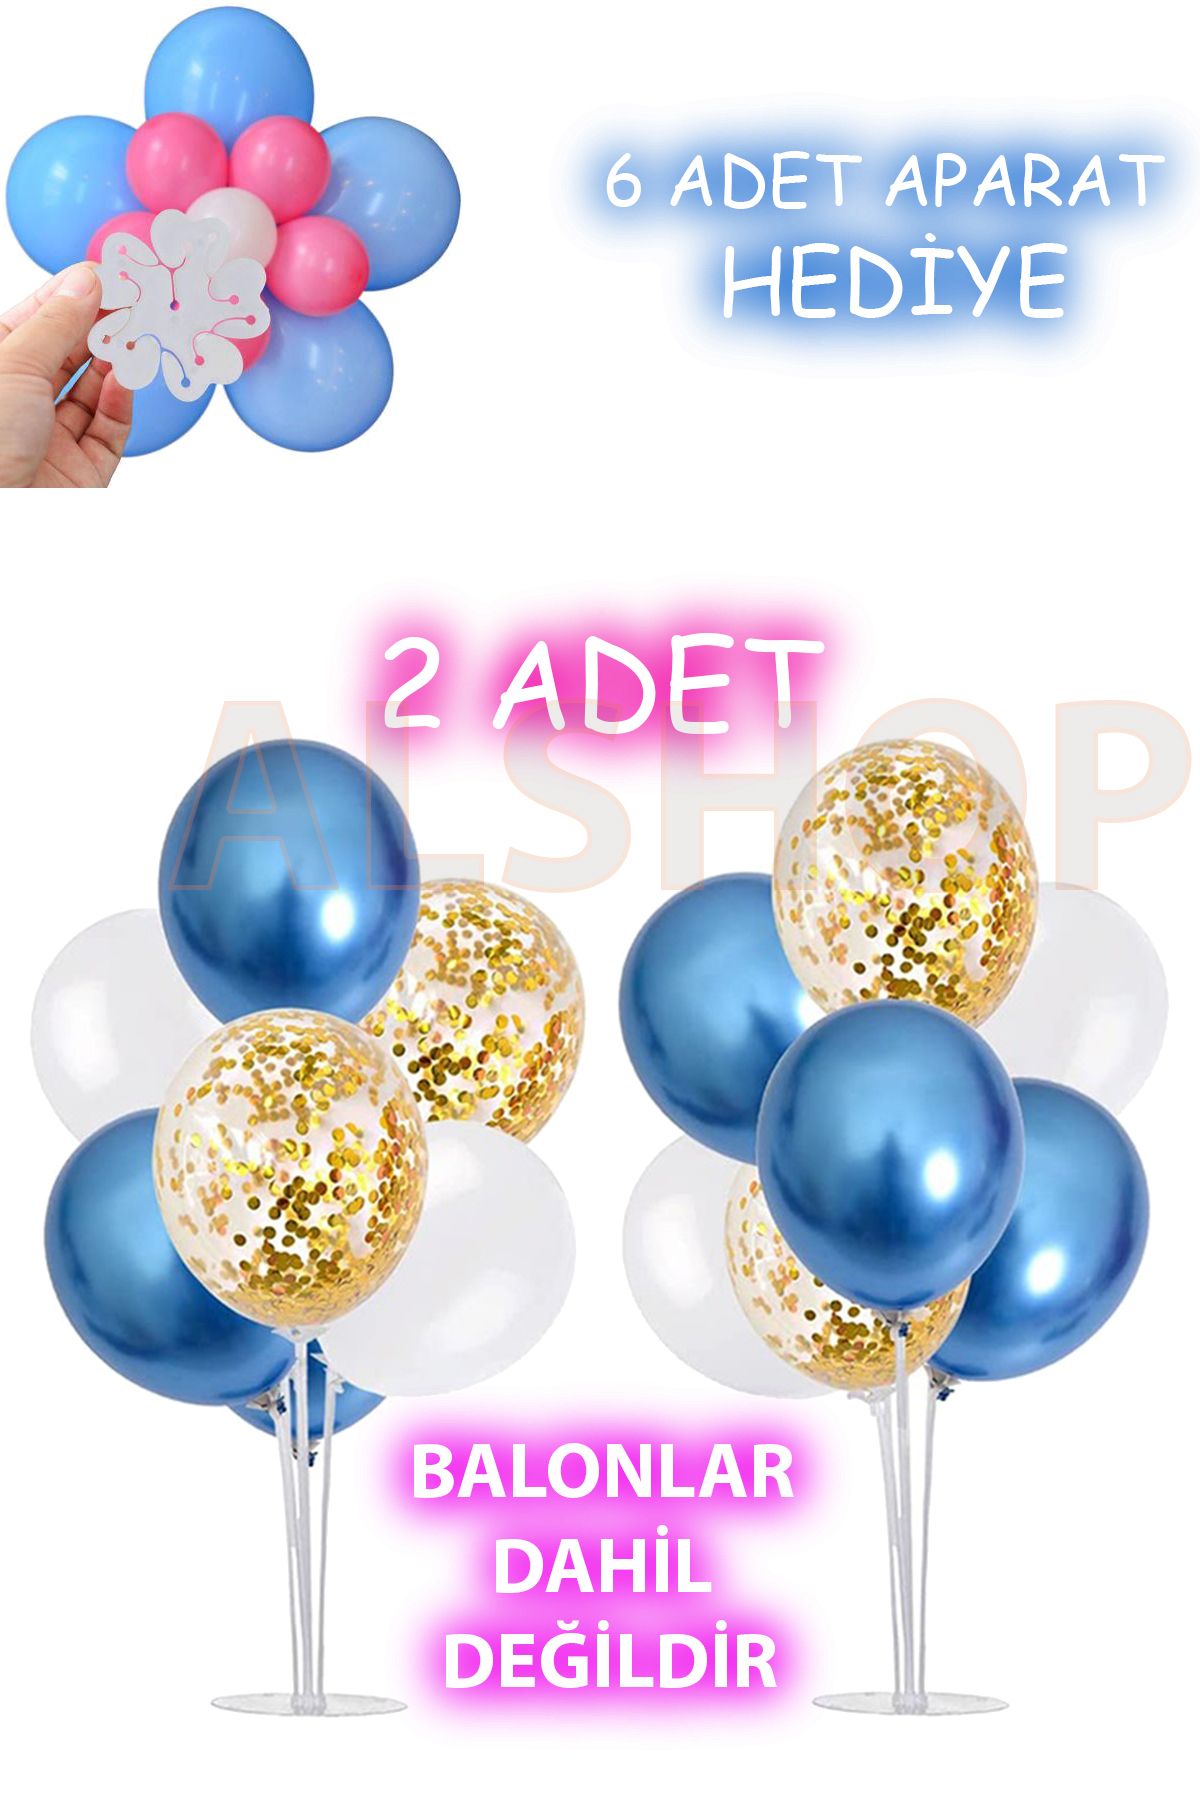 Alshop 2 Adet Balon Süsleme Standı 6 Adet Aparat Hediyeli 7li Çubuklu Ayaklı Stand